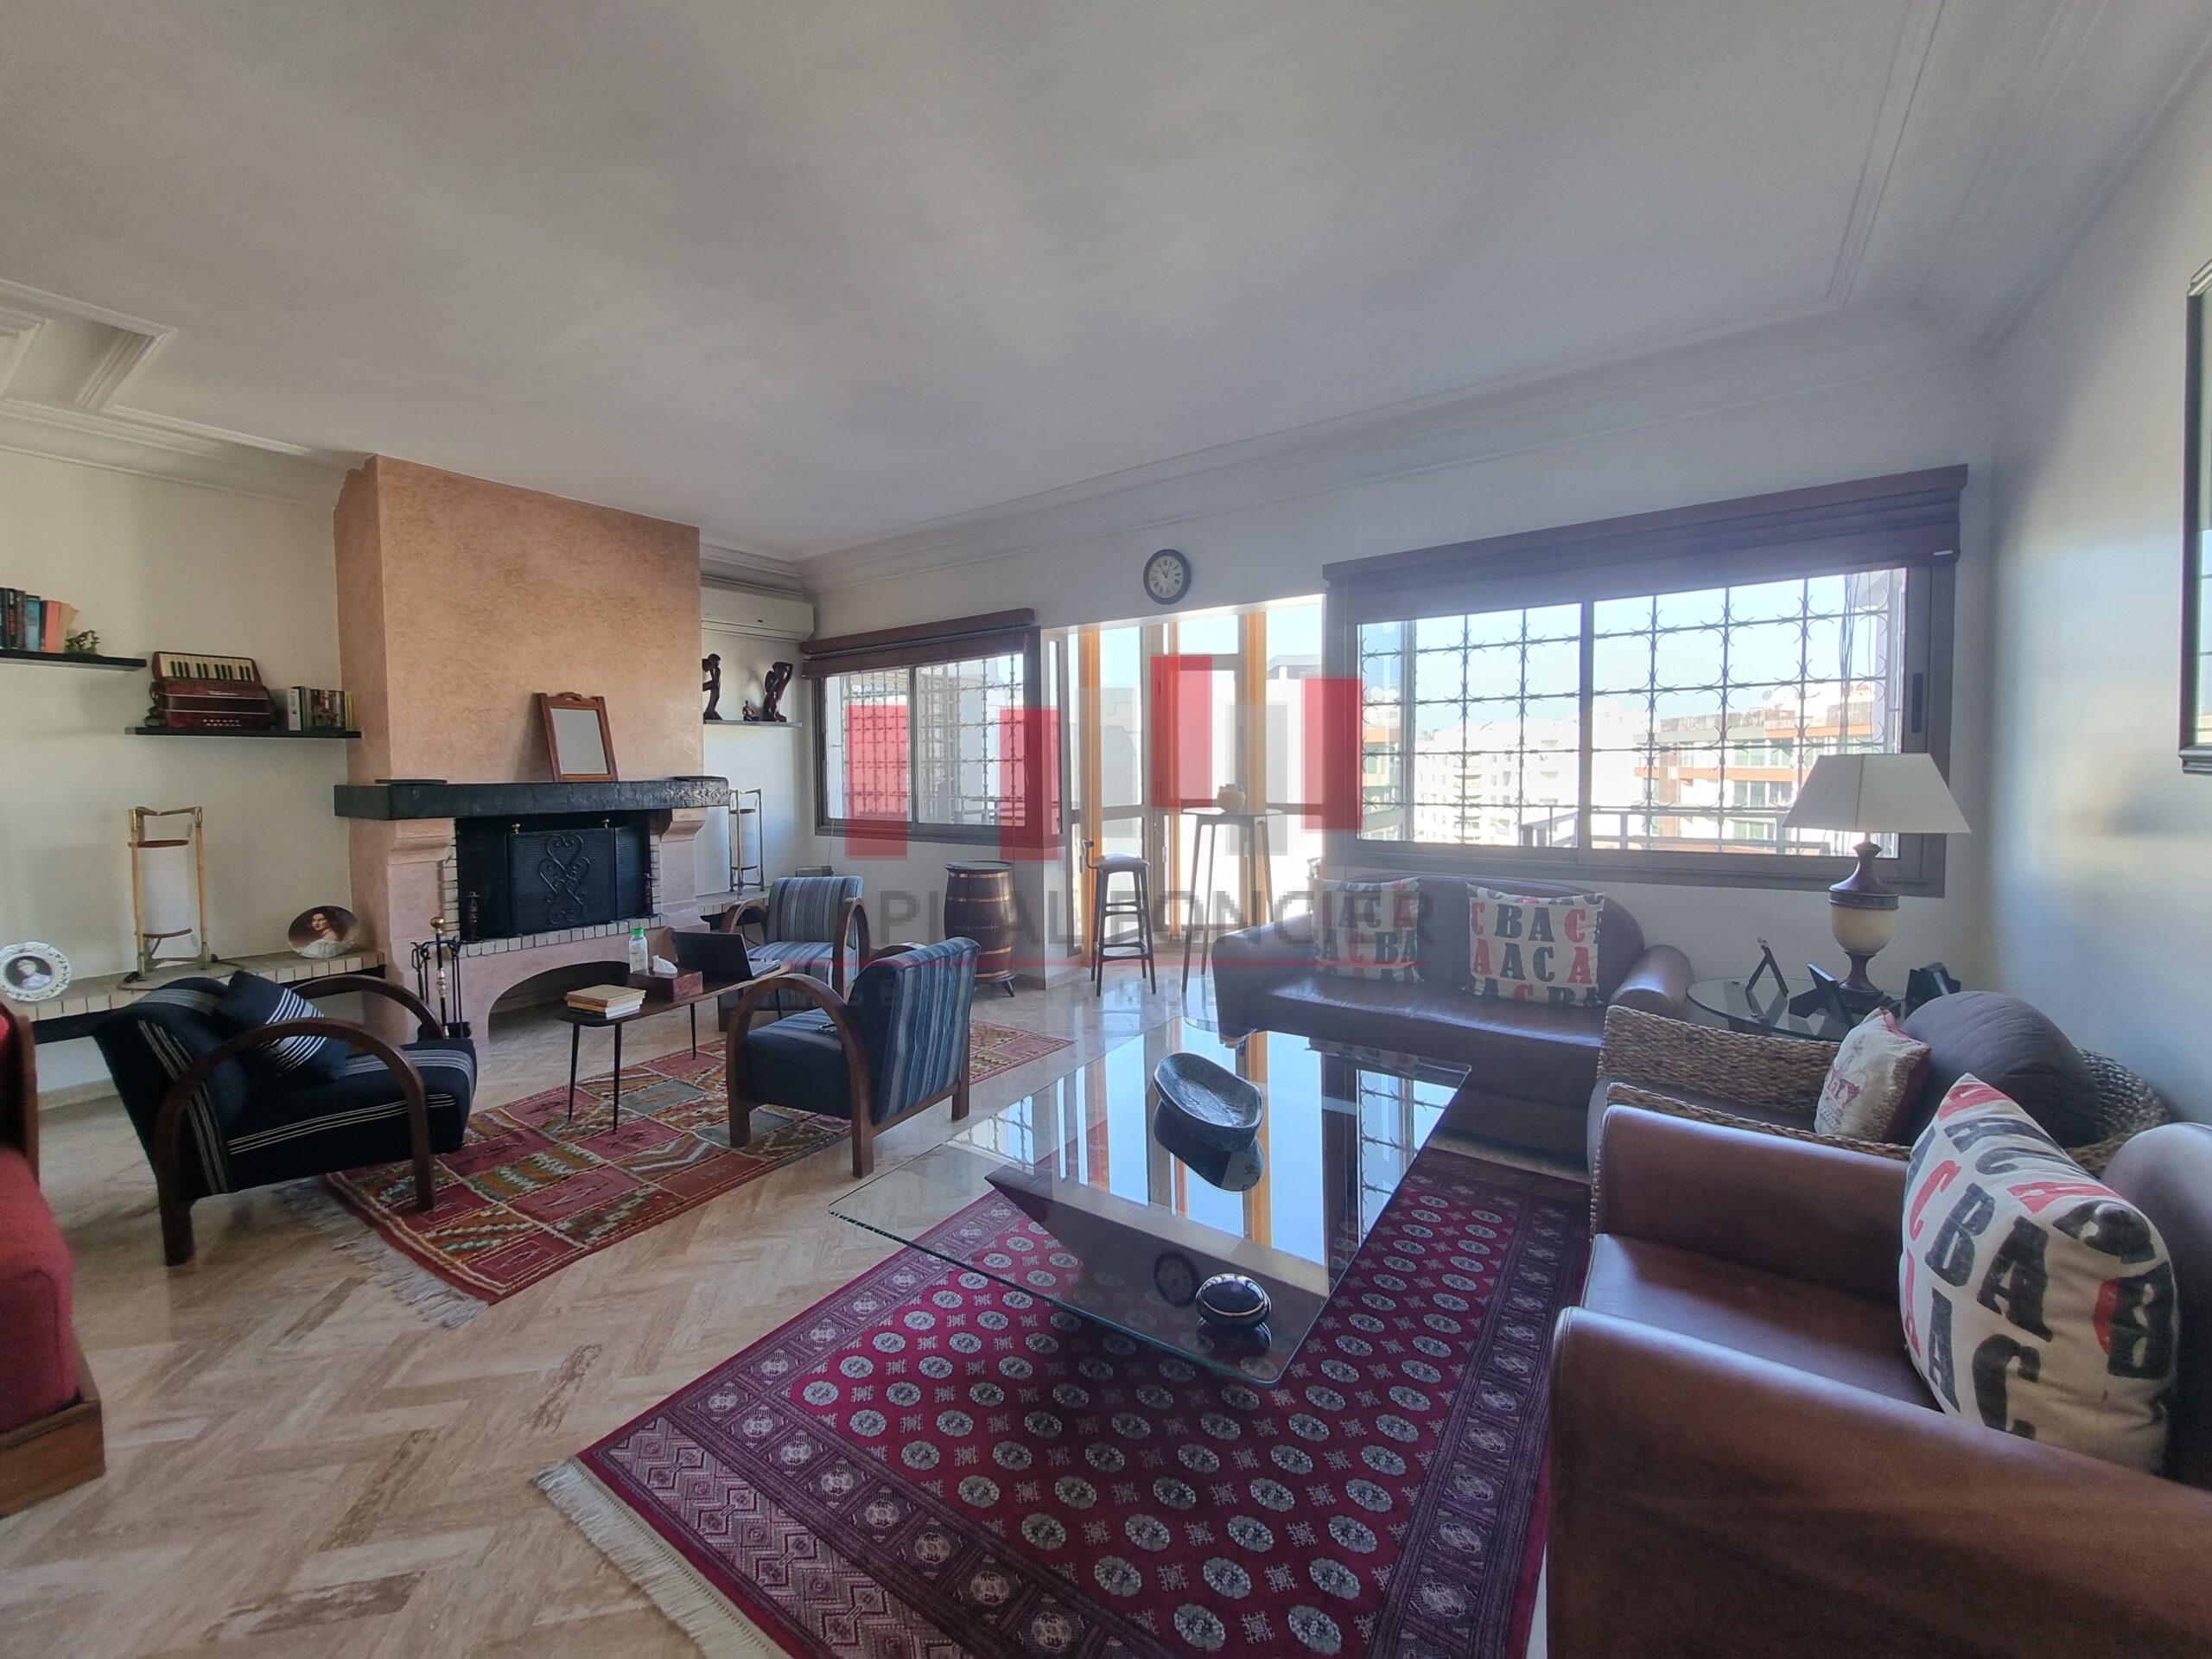 Apartment for Sale 3 400 000 dh 183 sqm, 3 rooms - Racine Casablanca